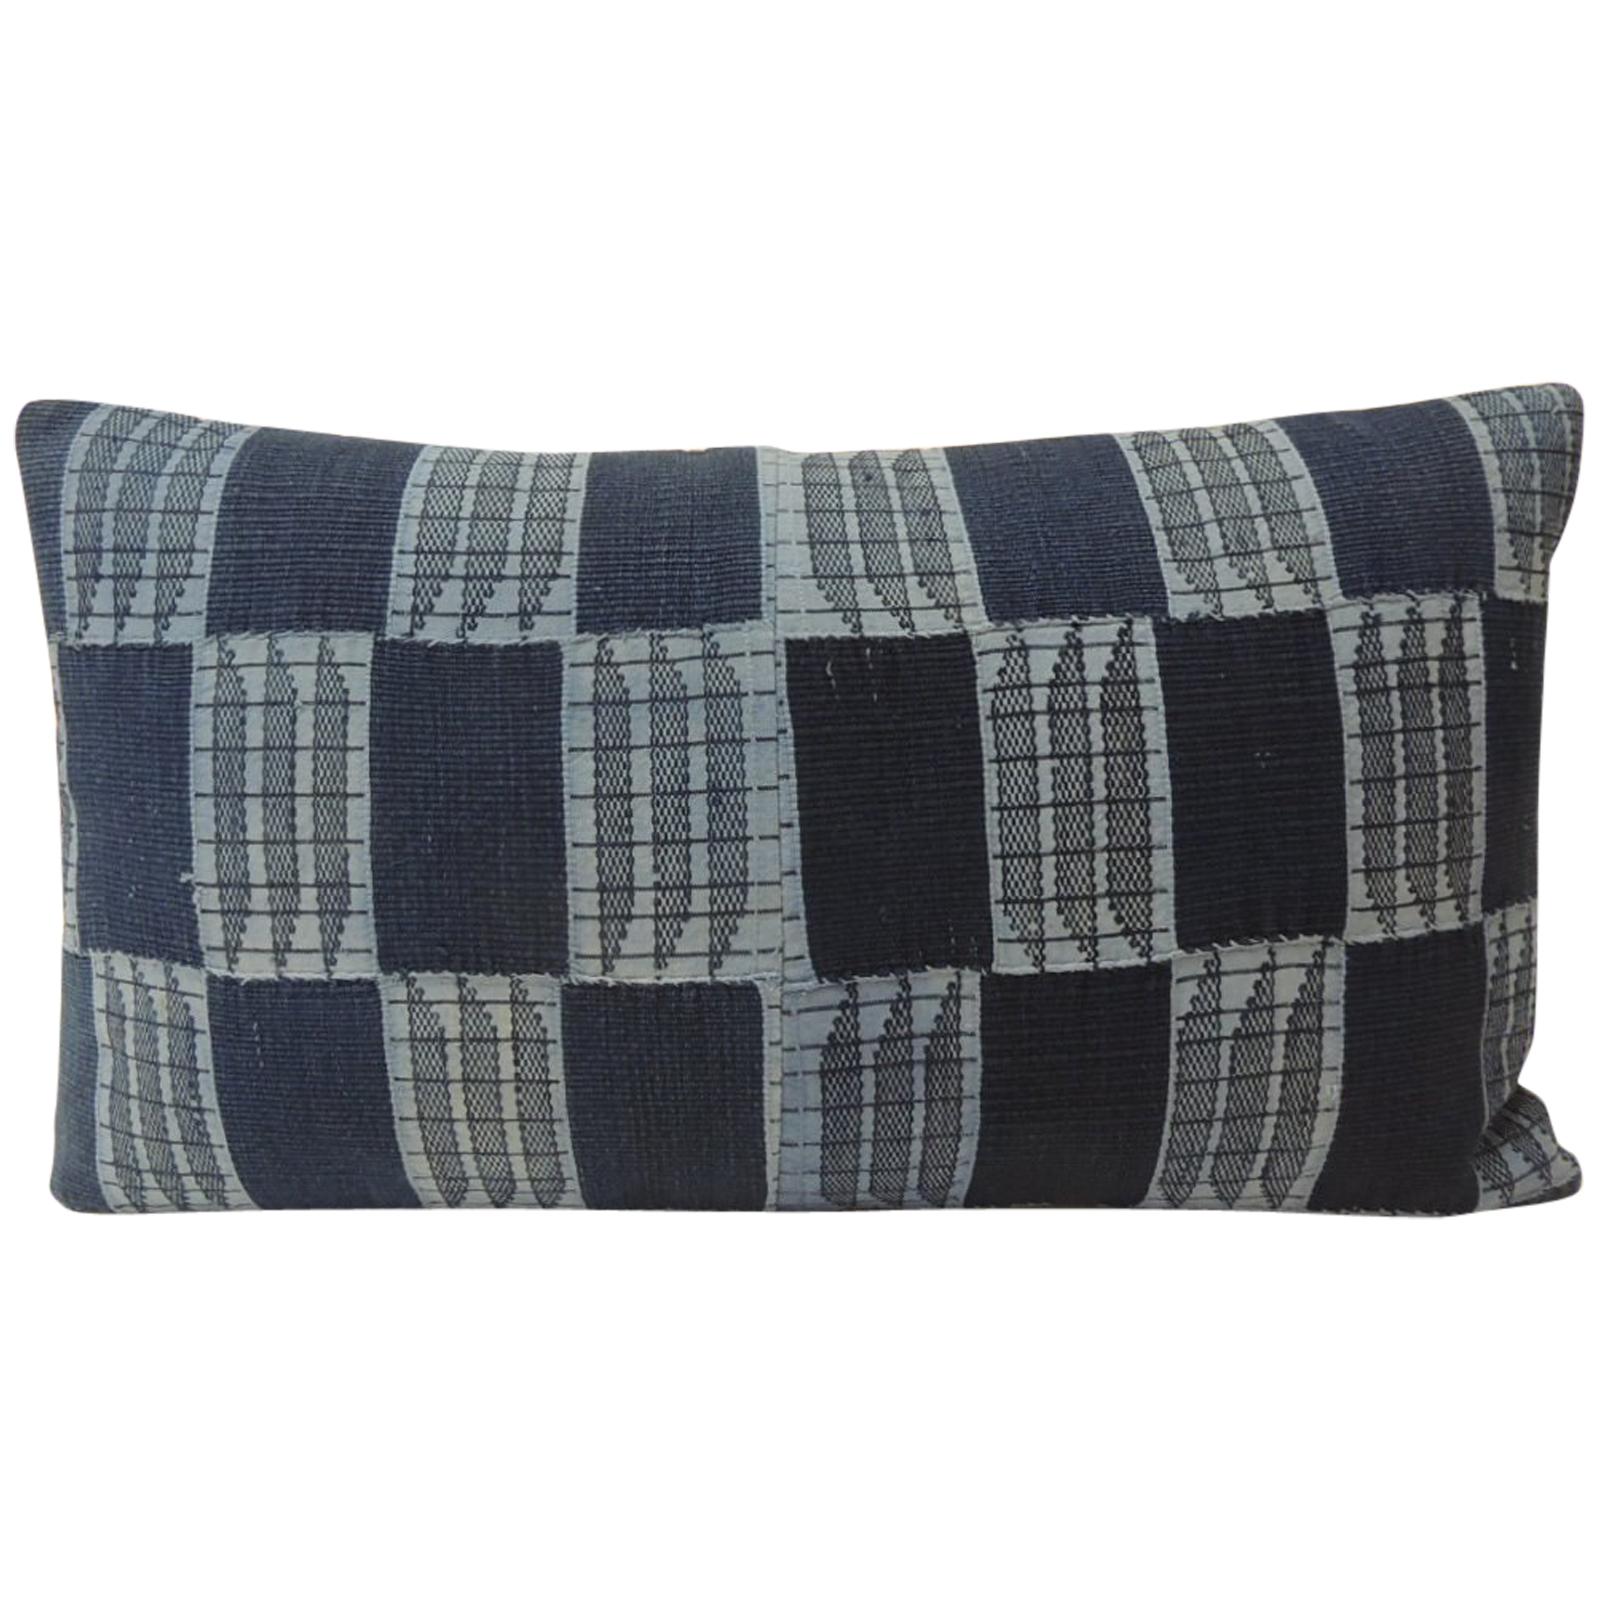 Pair of Vintage Indigo and Blue African Woven Pattern Decorative Lumbar Pillows